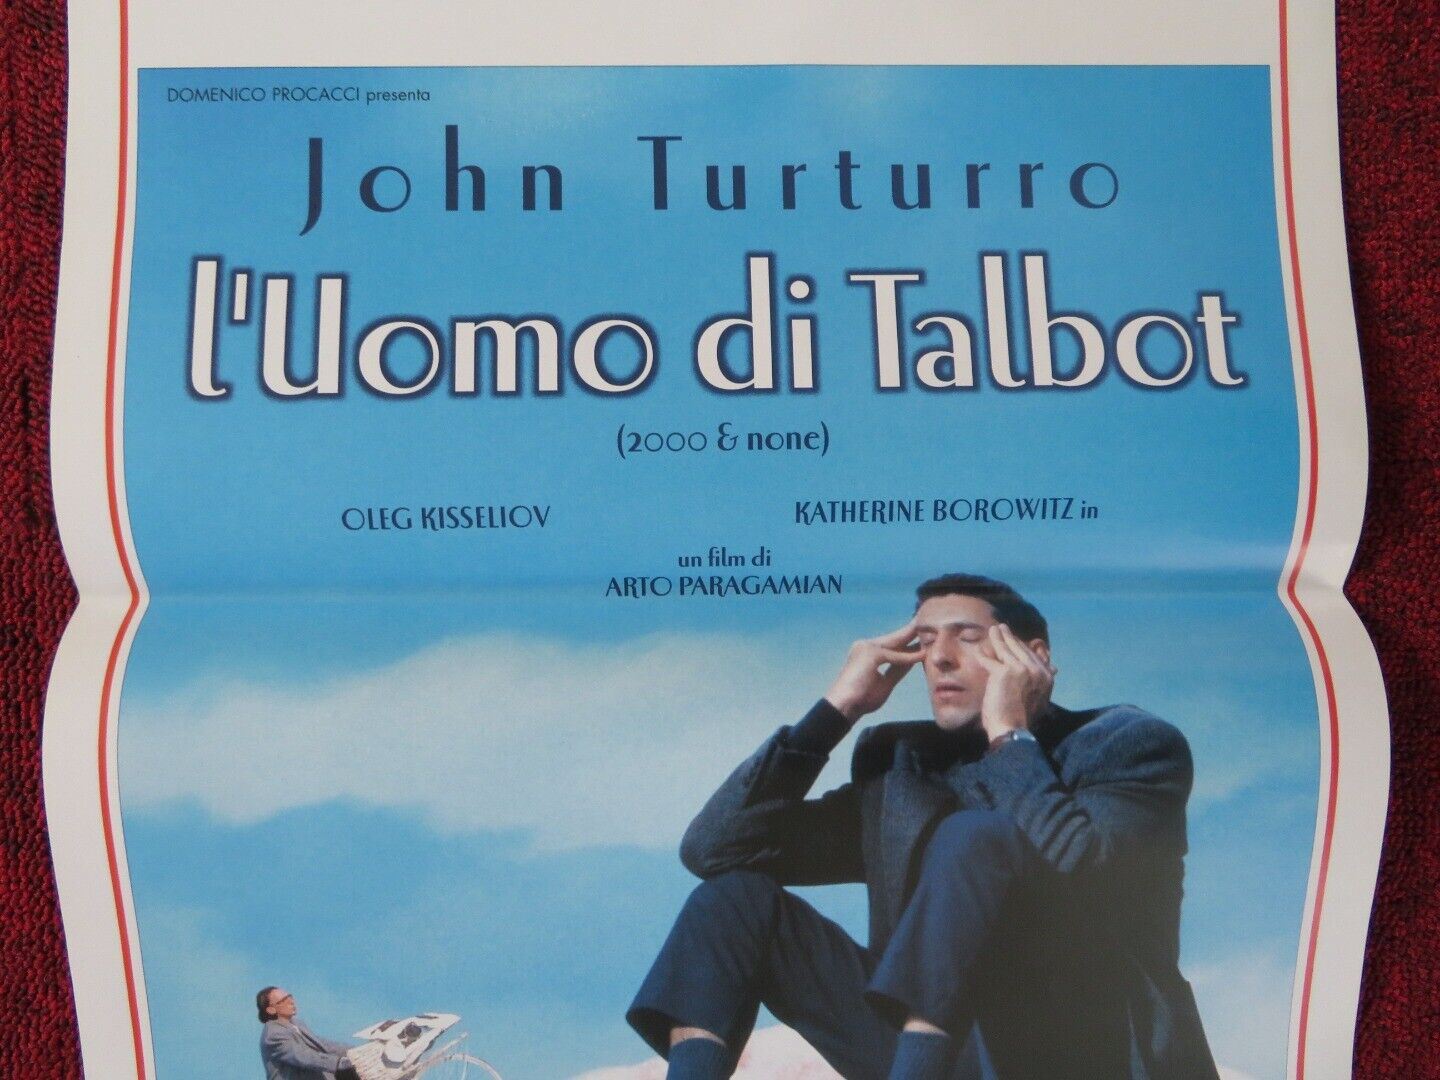 L'UOMO DI TALBOT  ITALIAN LOCANDINA (27.5"x13") POSTER JOHN TURTURRO 2001